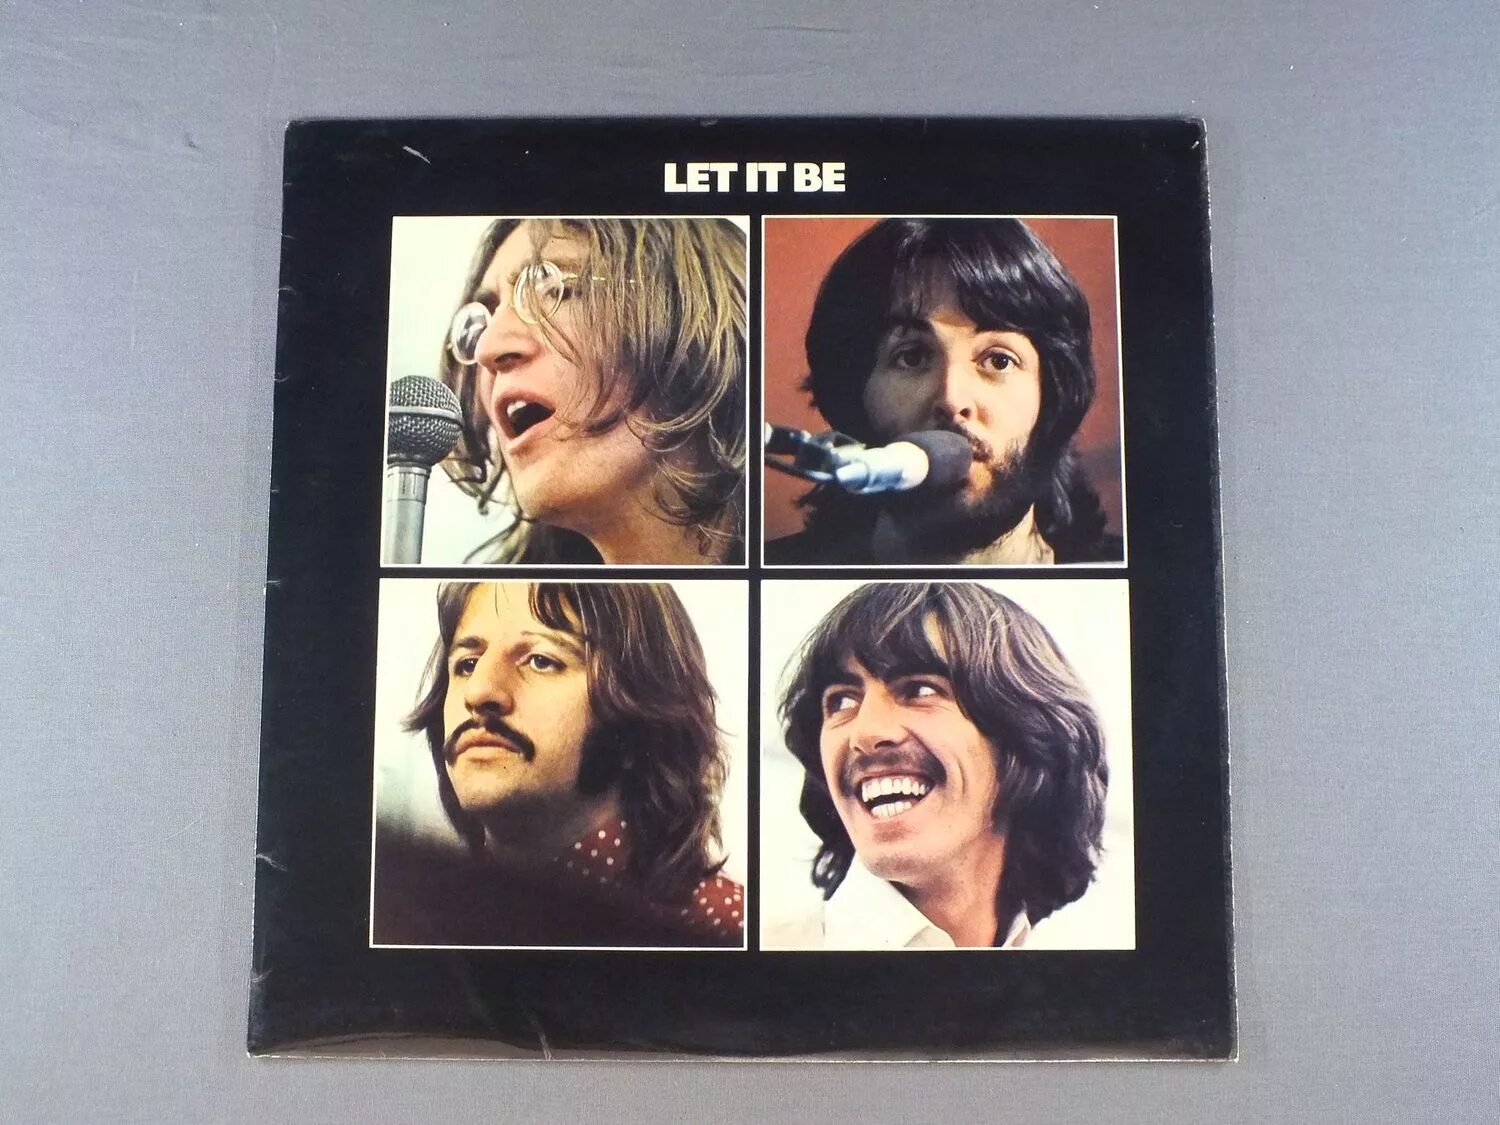 Битлз 1970 Let it be. Обложка альбома Битлз Let it be. The Beatles Let it be 1970 обложка. Битлз 1970 Let it be в студии. Лет ит ми